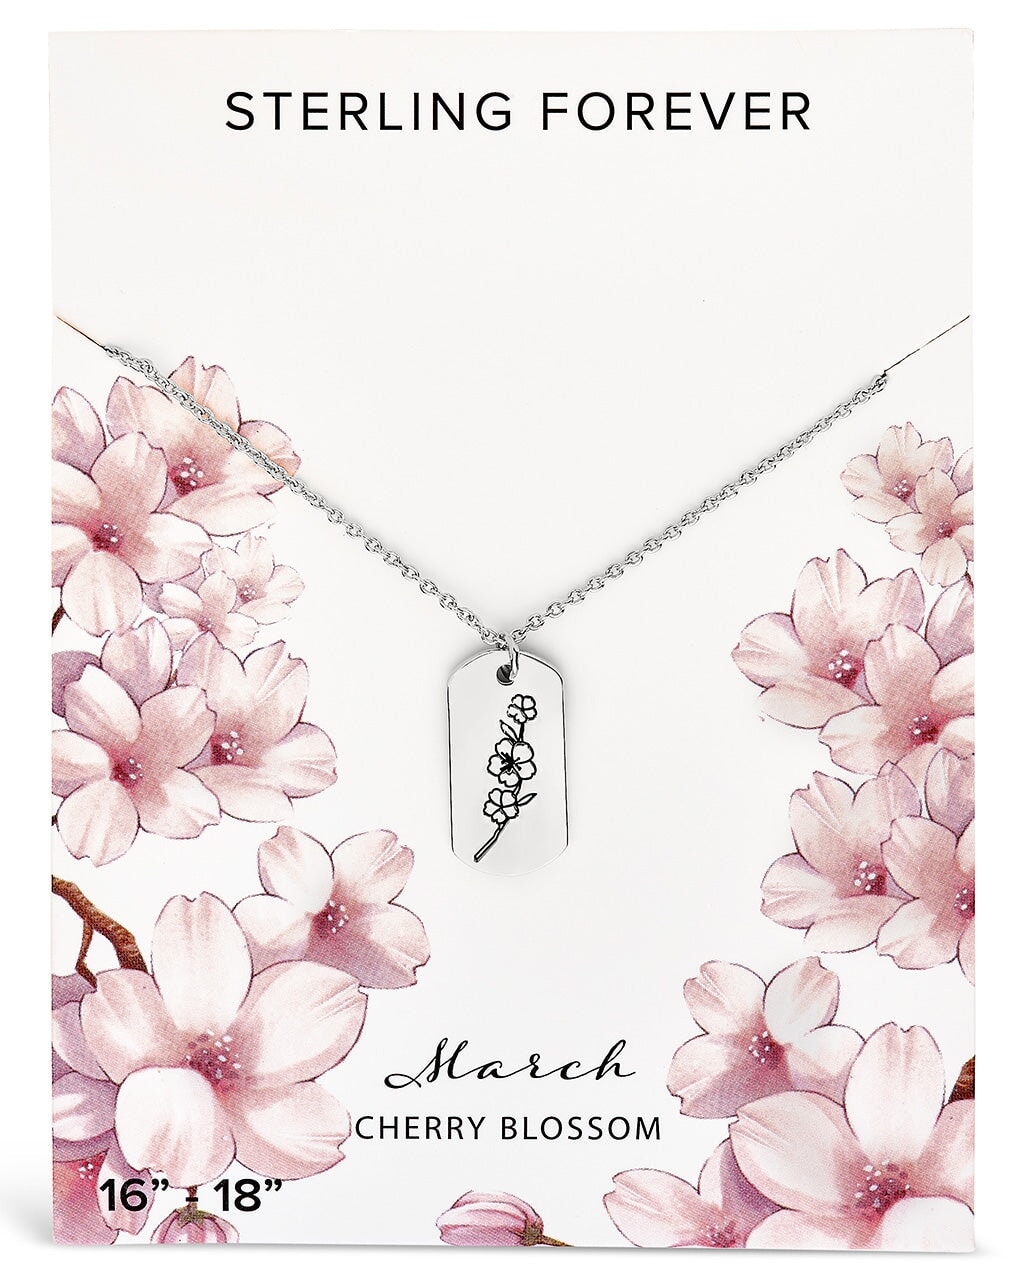 Star Flower Blossom Diamond Pendant Necklace